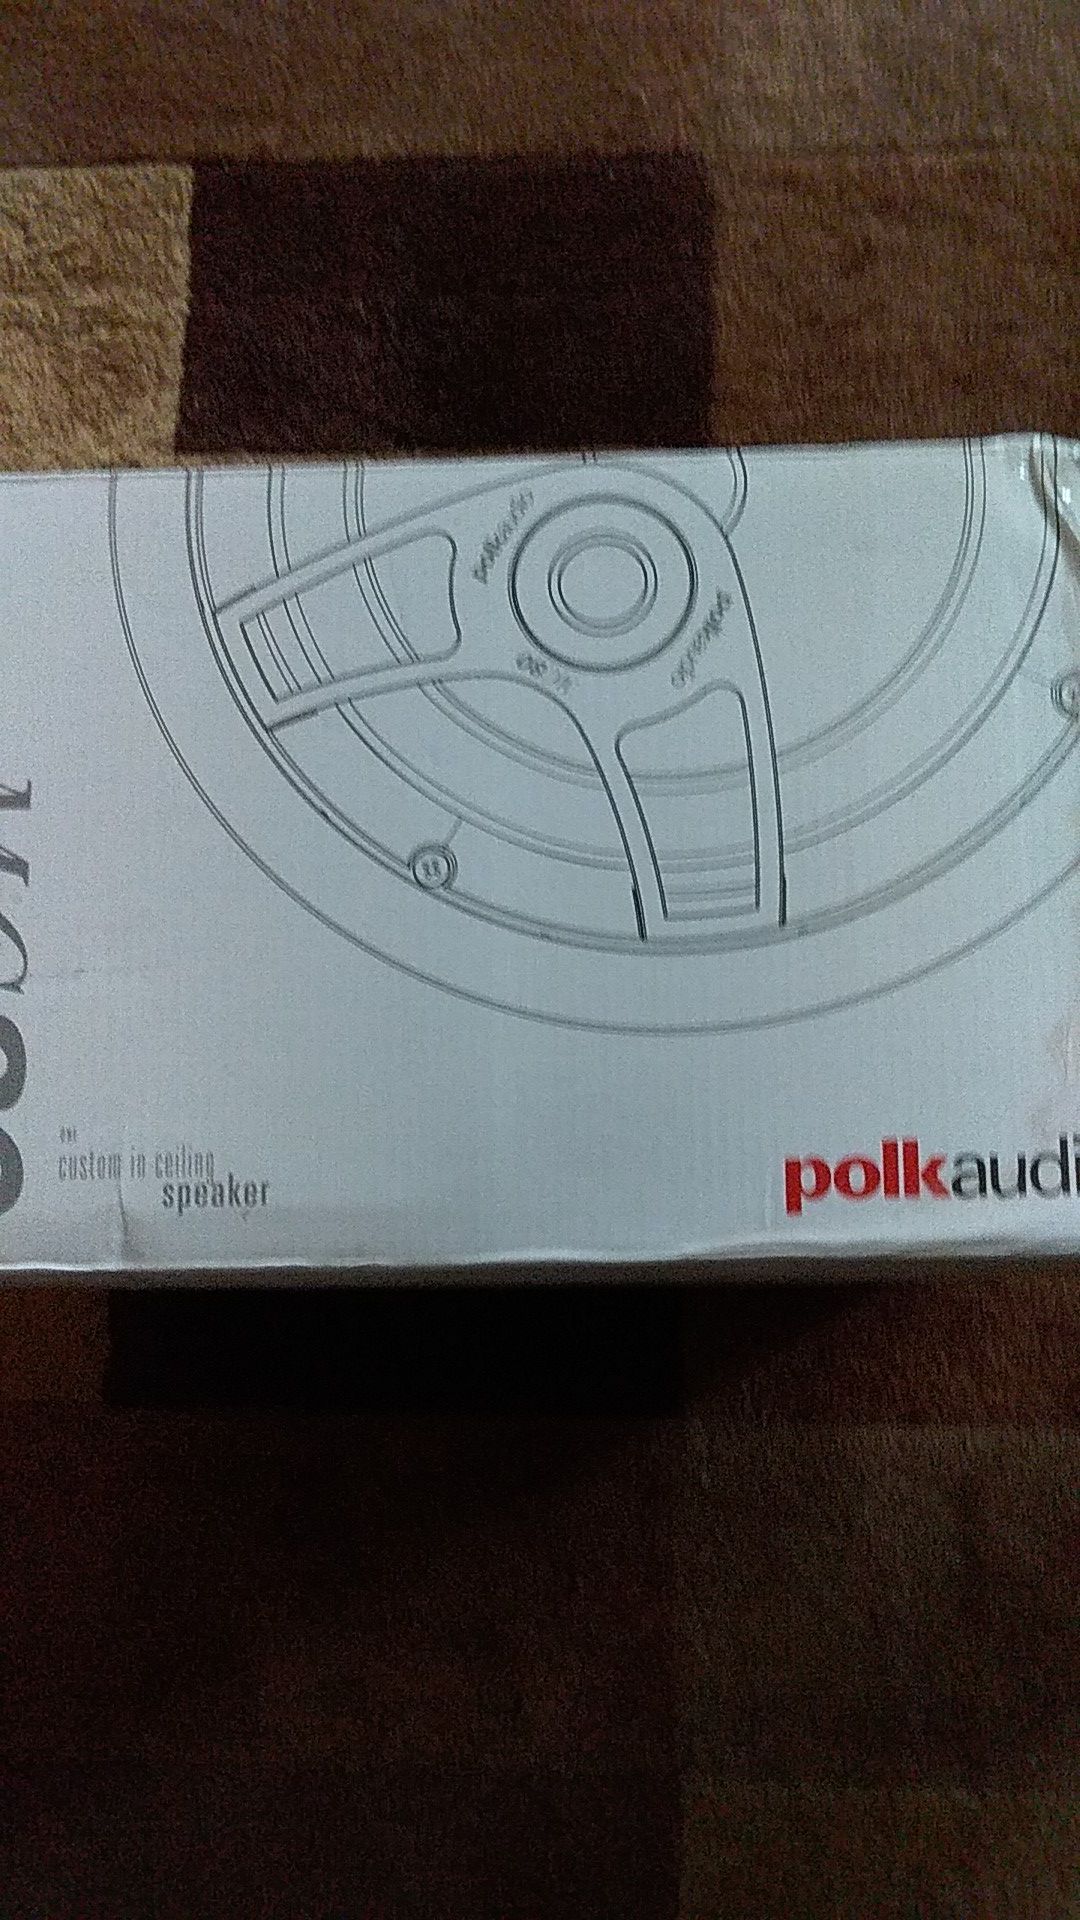 Polk Audio mc80 ceiling speaker